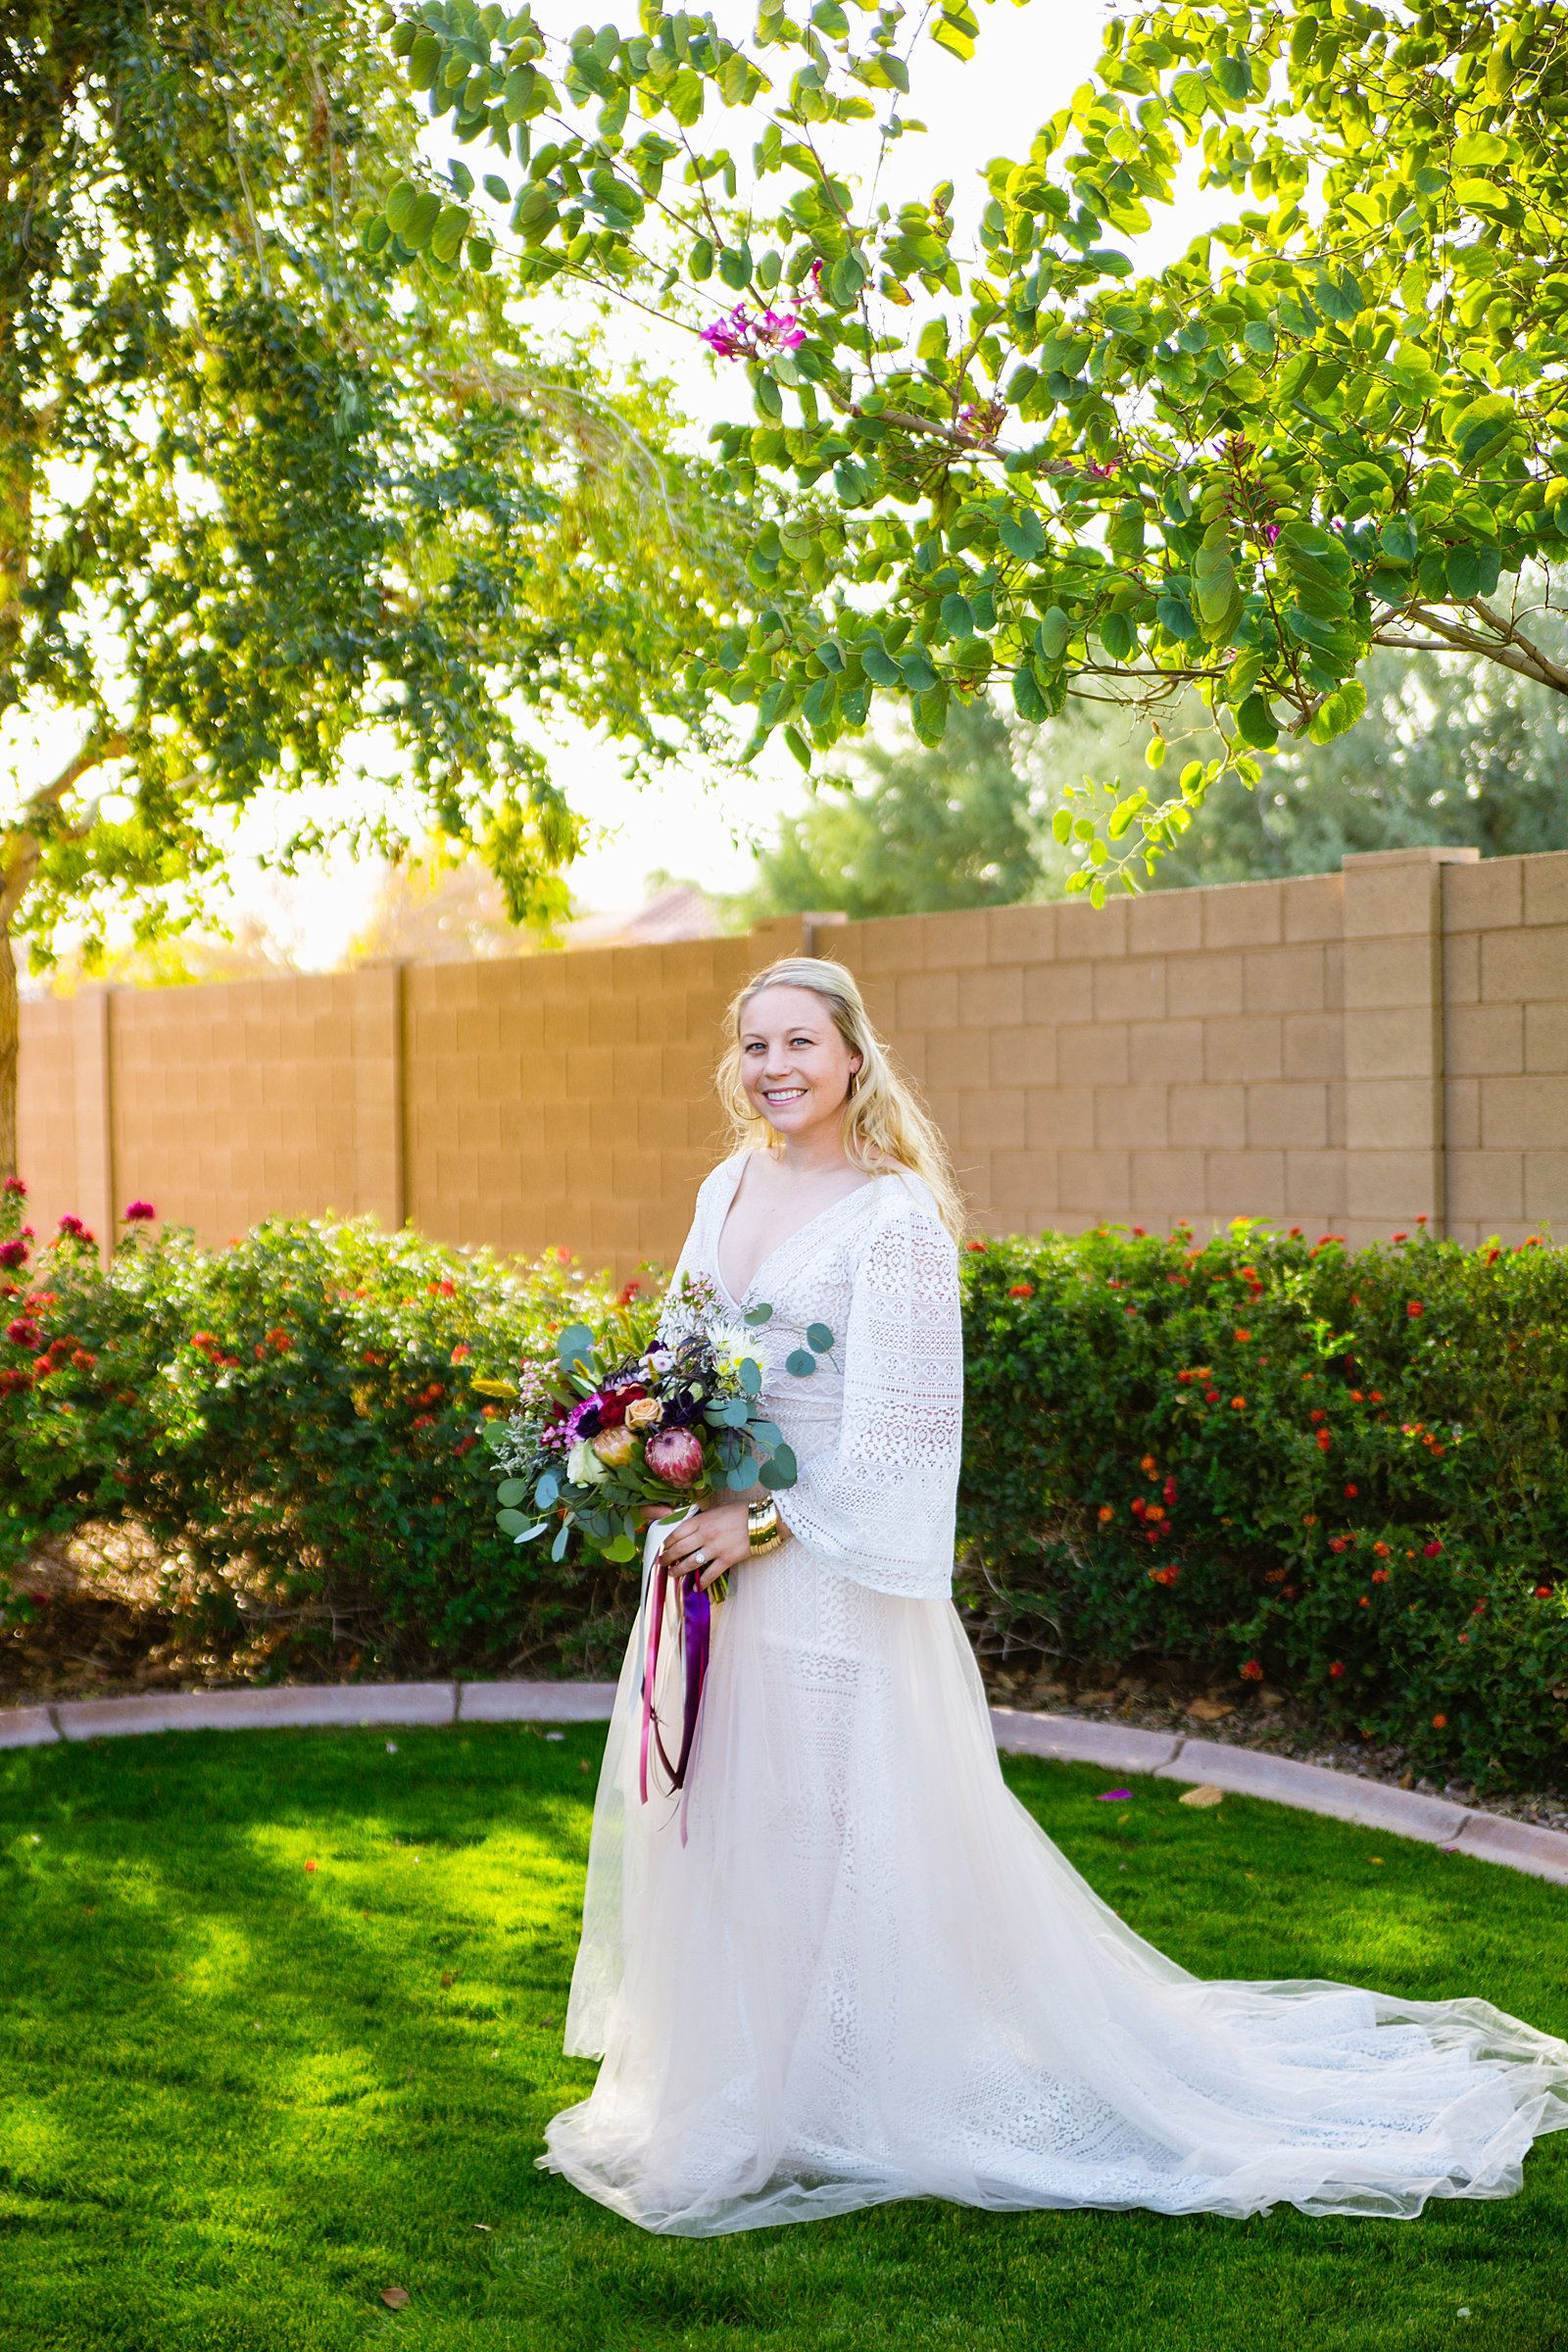 Bride's boho wedding dress for her backyard wedding by PMA Photography.